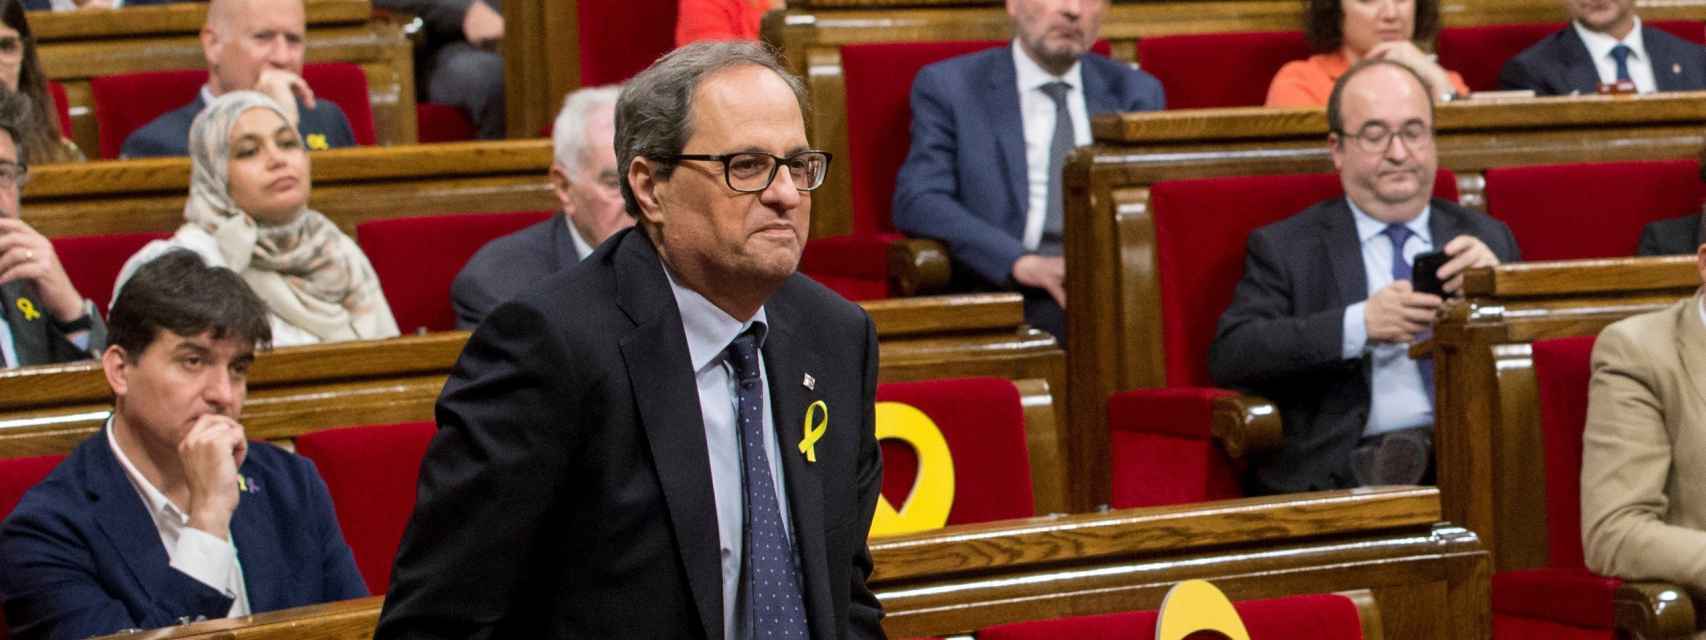 El candidato de JxCat a ser investido presidente de la Generalitat, Quim Torra